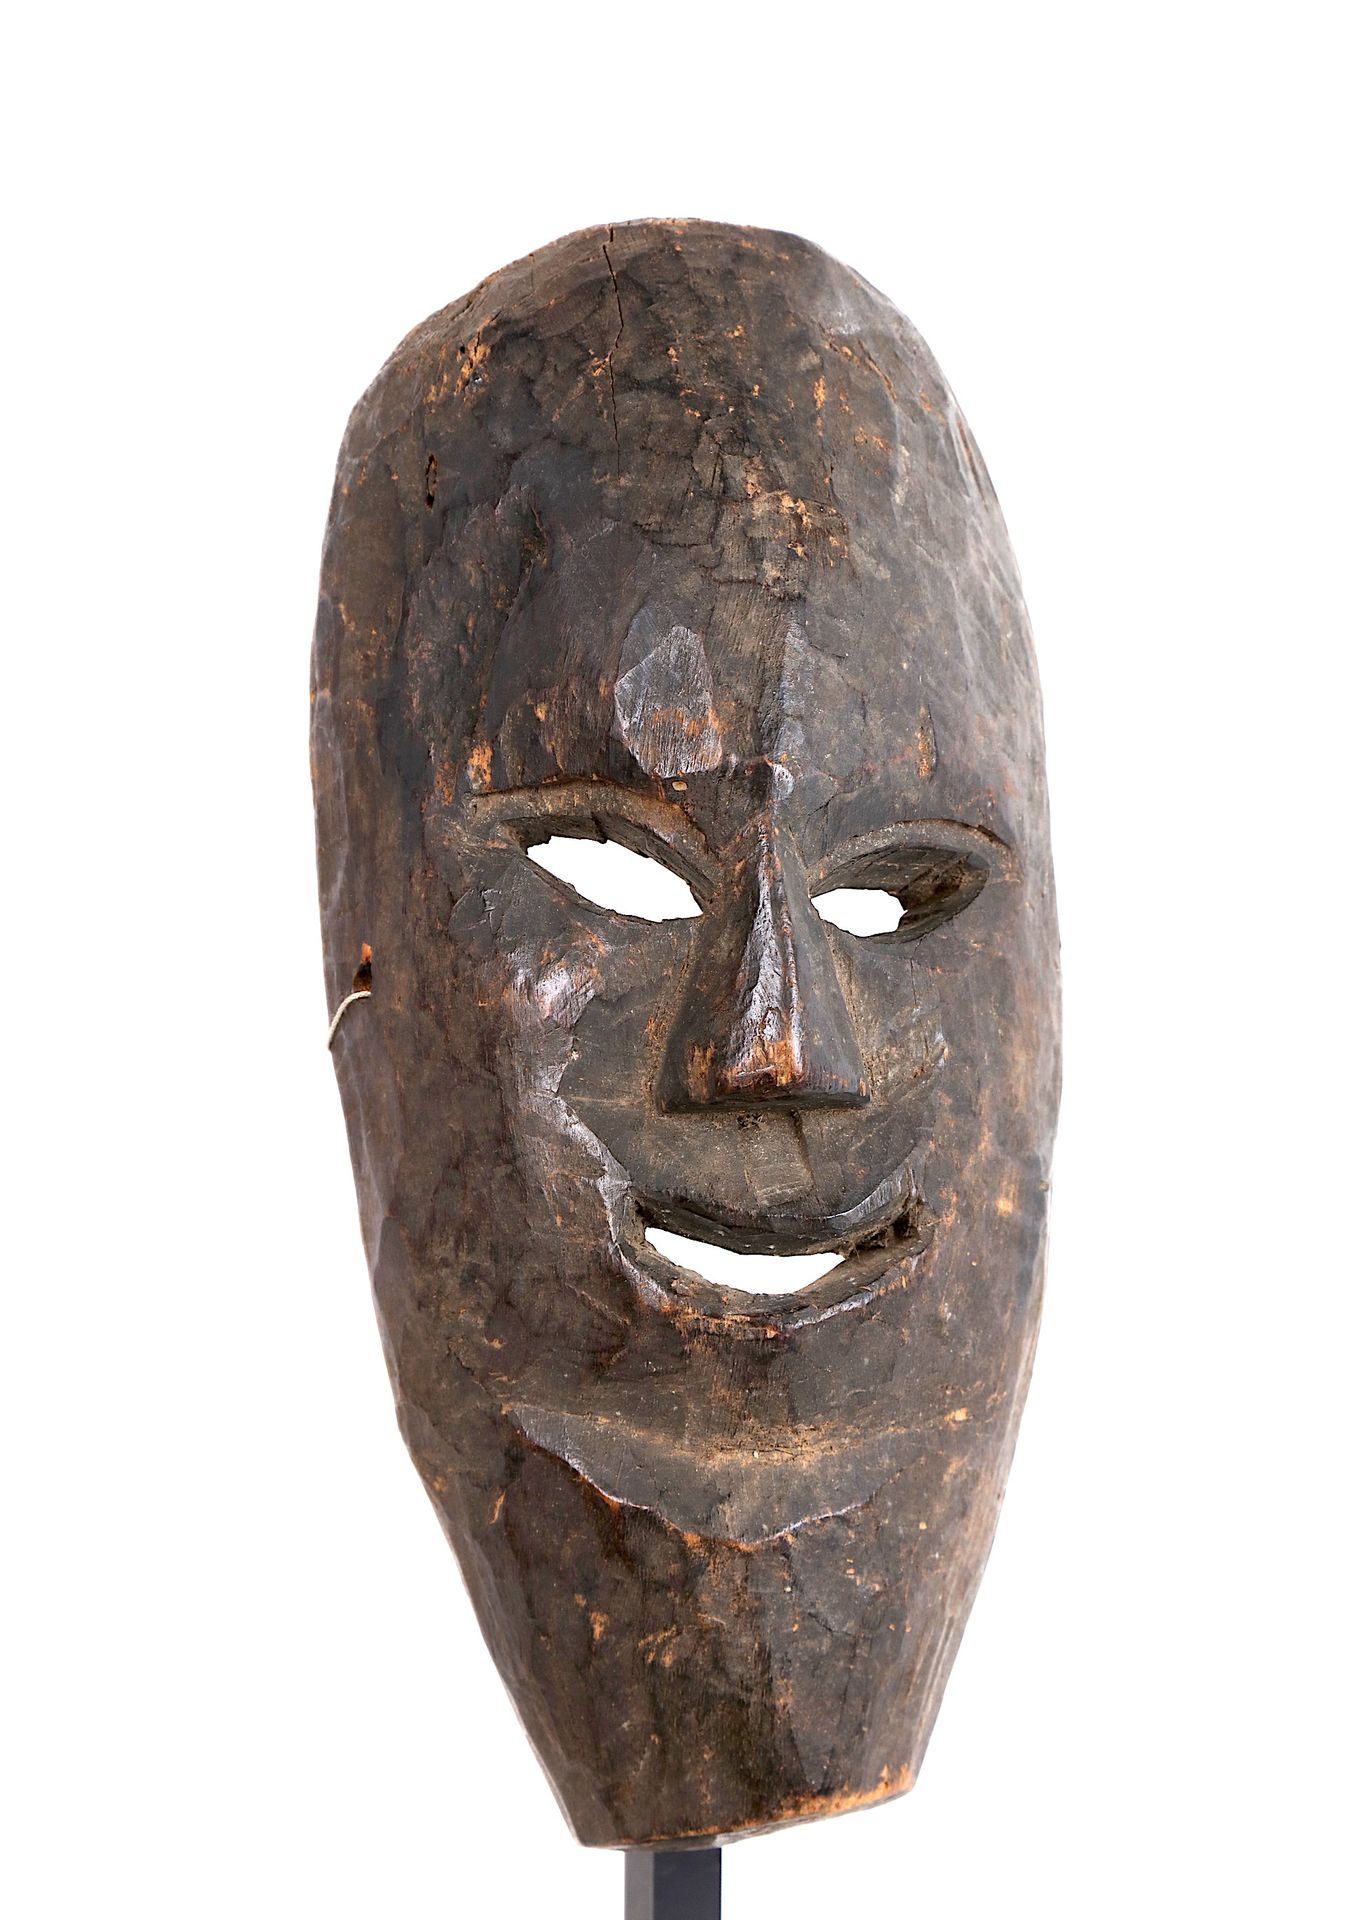 Null 刚果。椭圆形的深色木制面具，脸部被拉长，眼睛偏斜。(参考 13) 高度：31厘米。